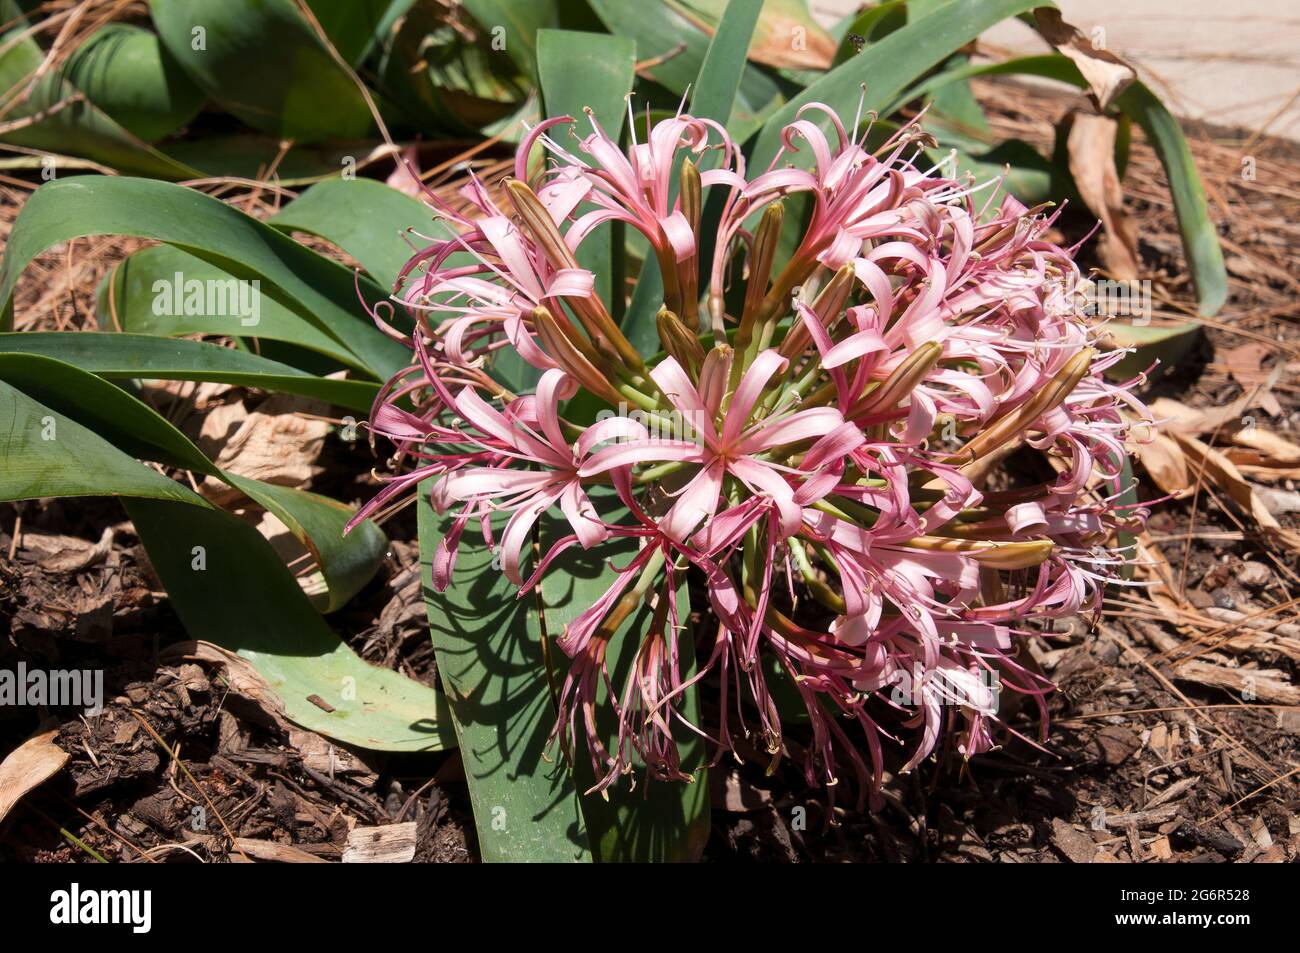 Sydney Australia, flowerhead of an ammocharis coranica or sore eye flower Stock Photo